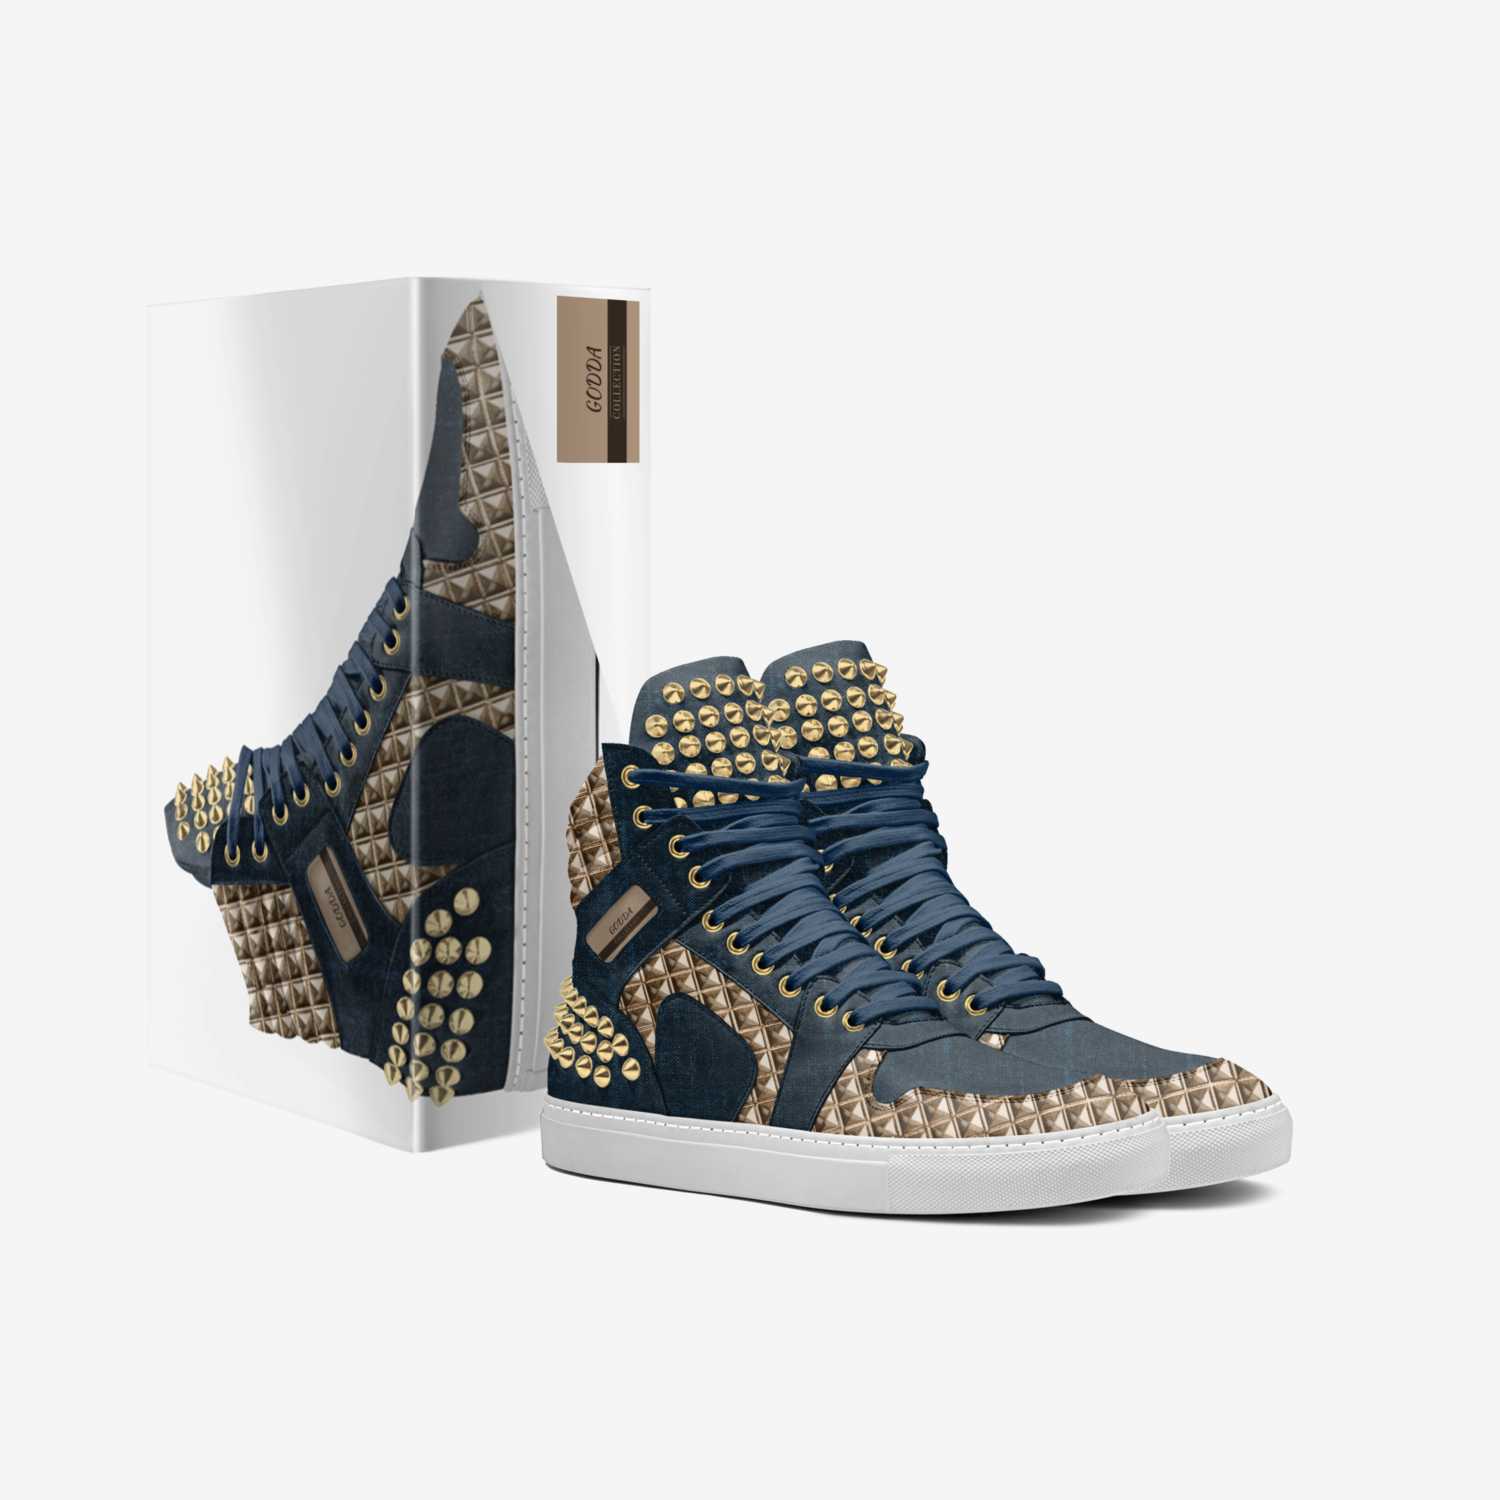 GODDA custom made in Italy shoes by Sabrina Nesmith | Box view